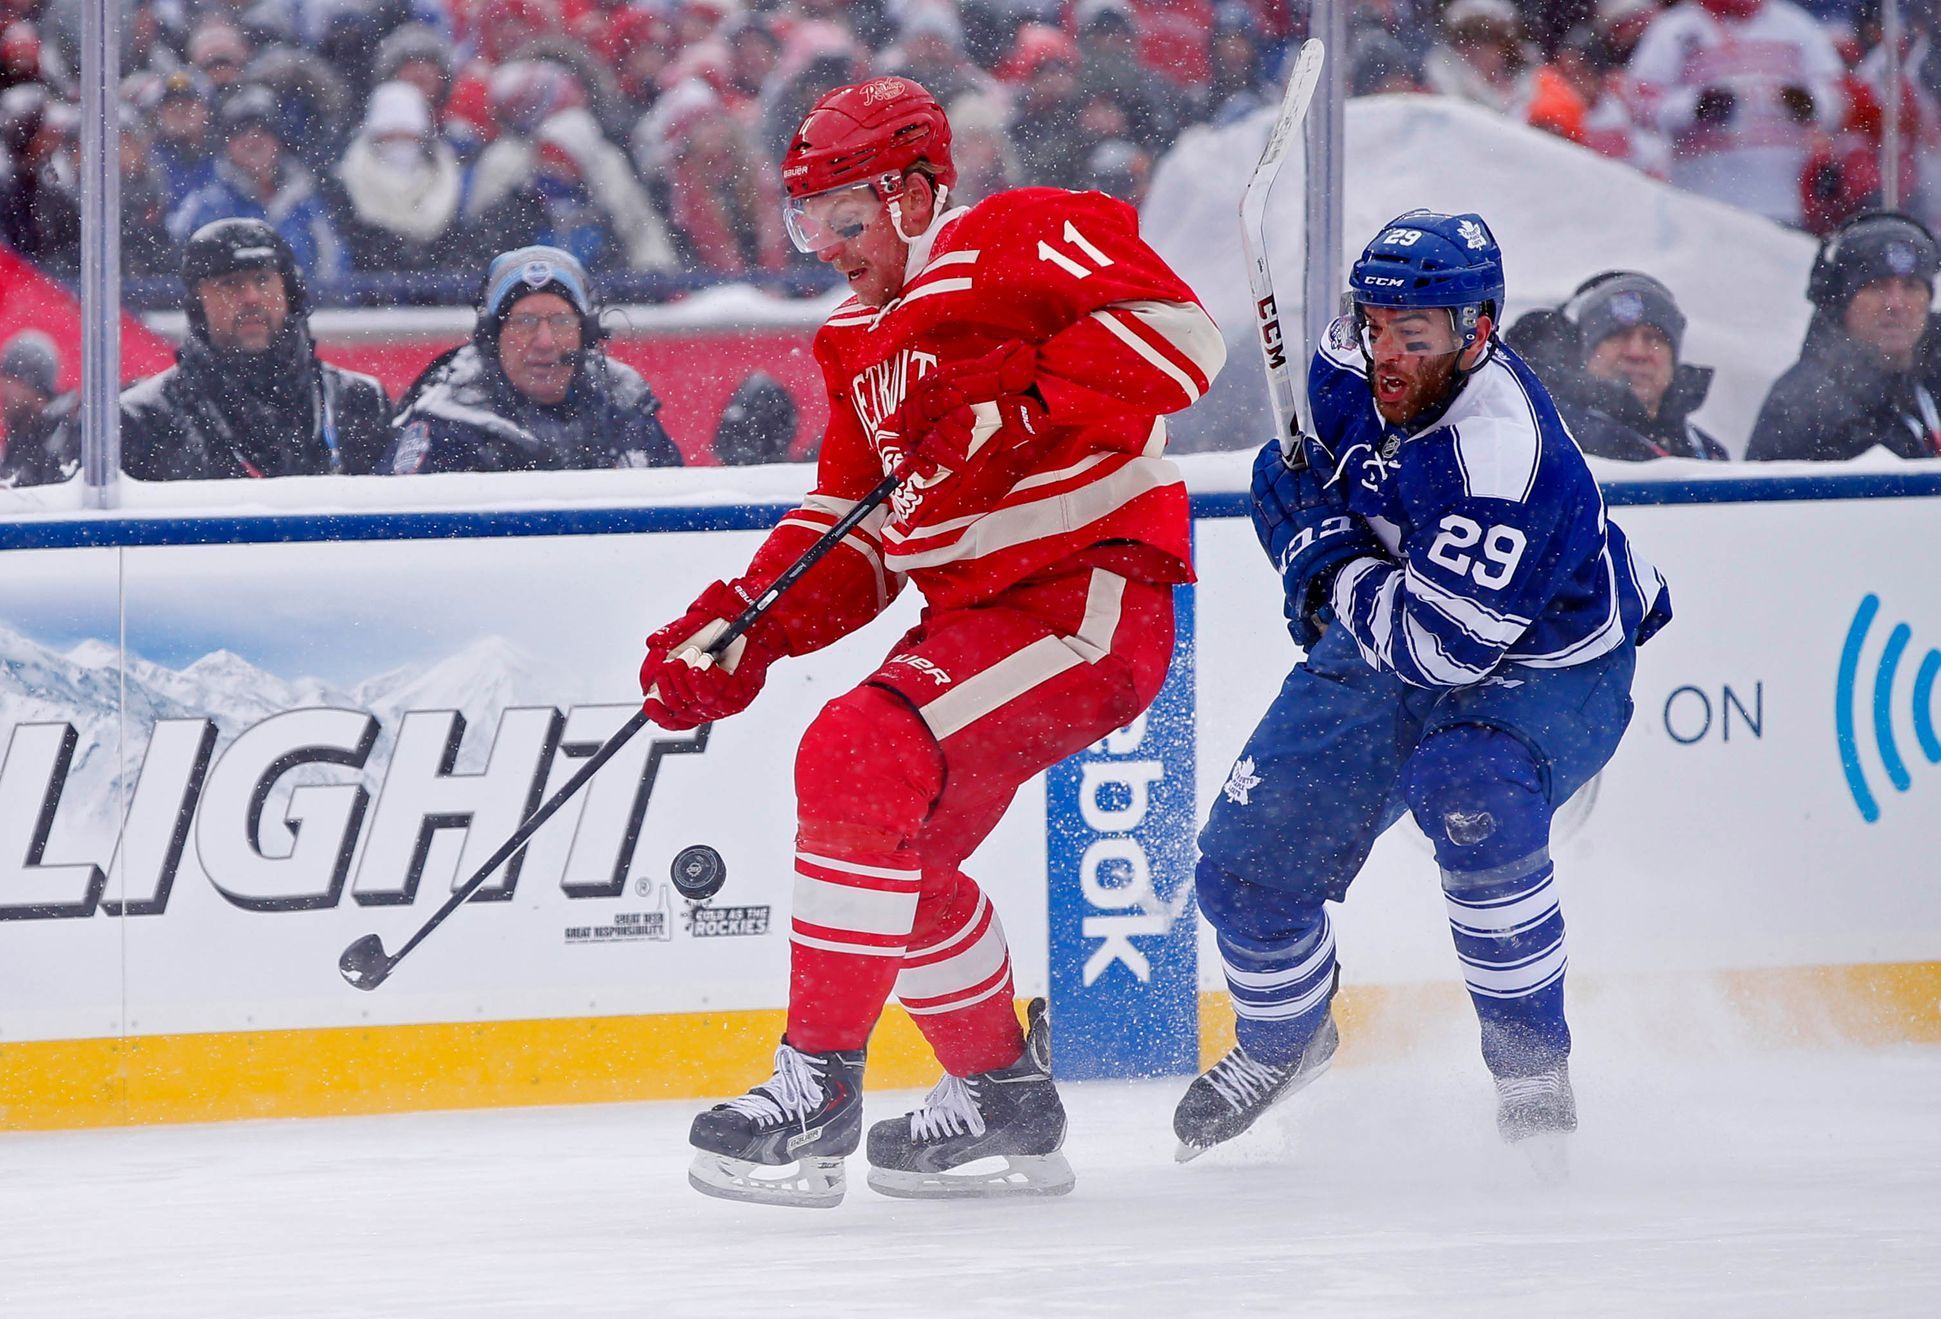 NHL Winter Classic, Detroit-Toronto: Daniel Alfredsson (11) - Jerry D'Amigo (29)